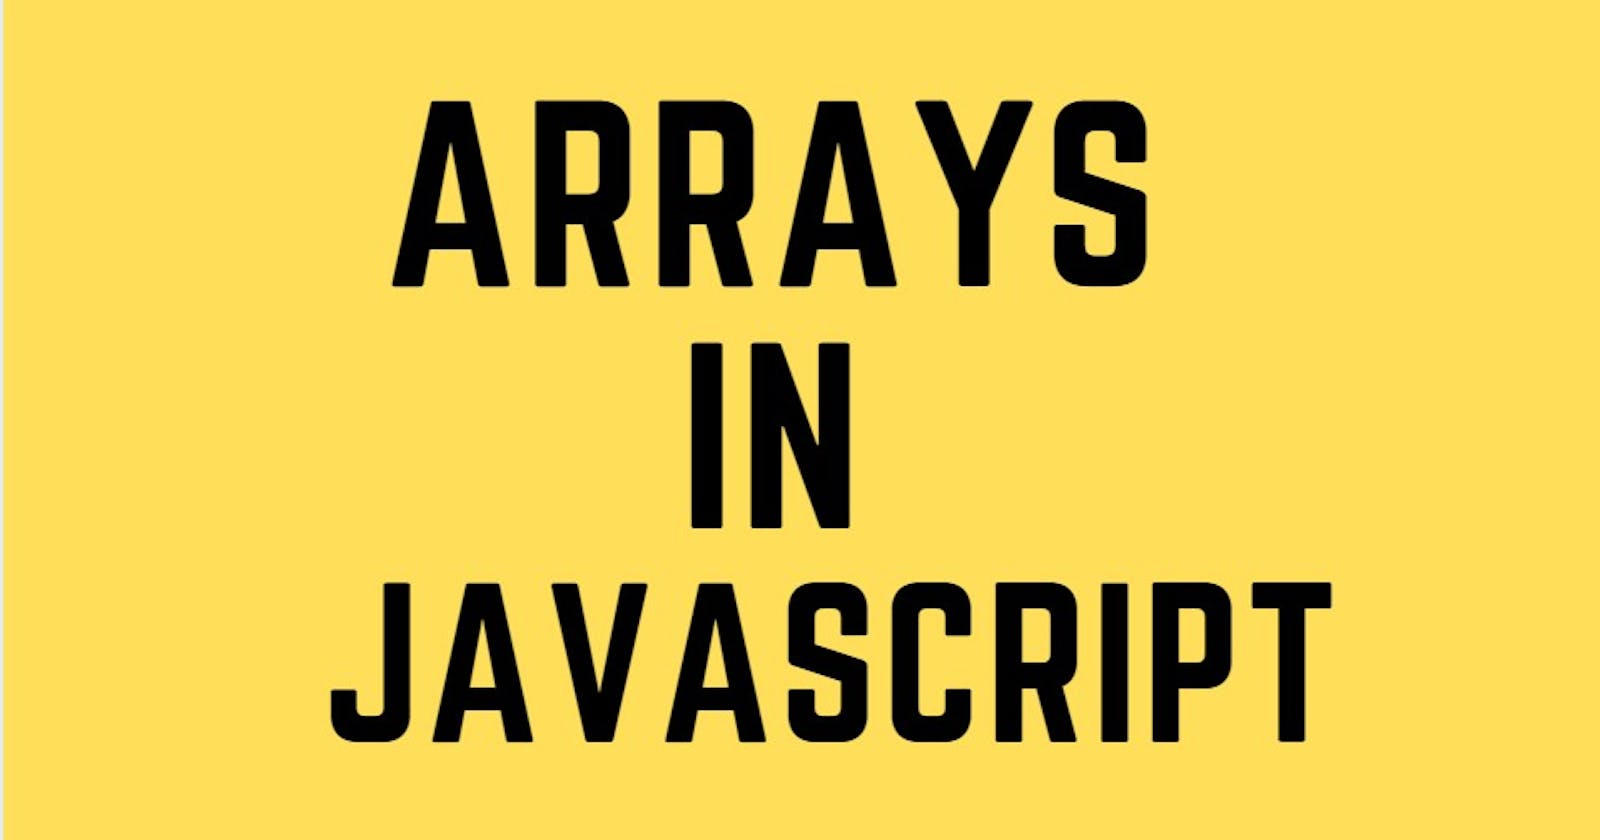 Arrays in Javascript